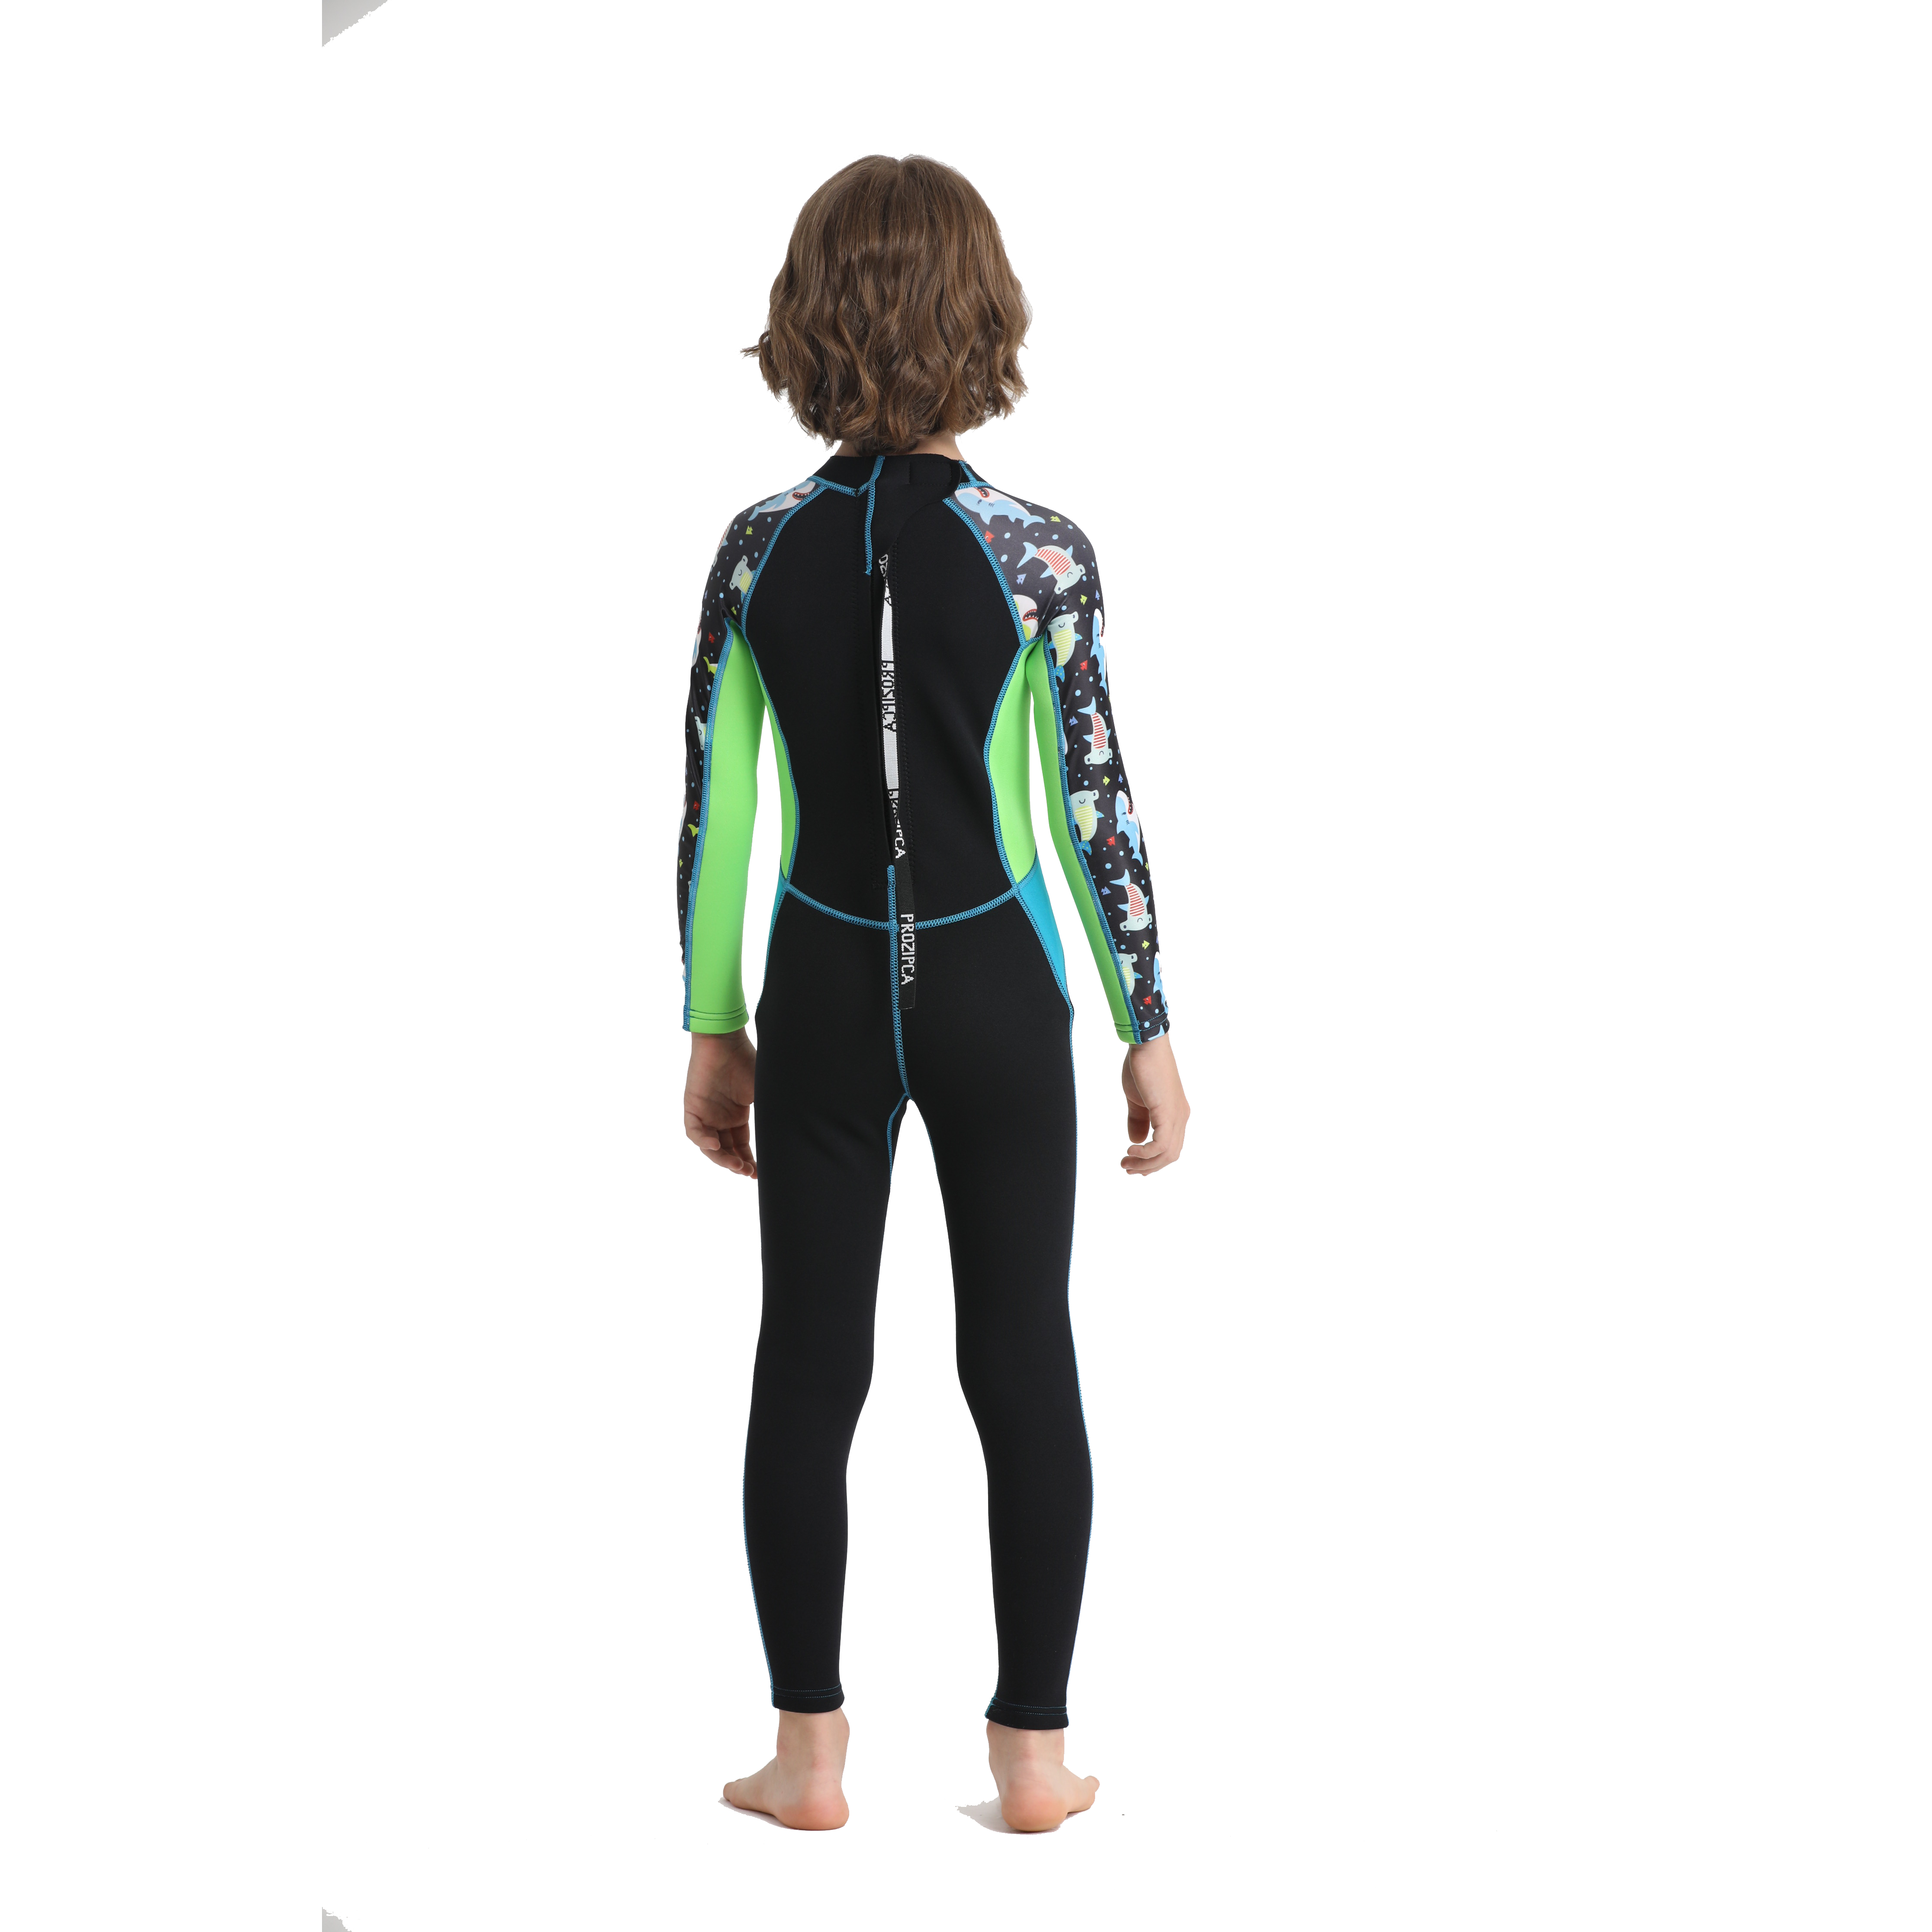 Customized Swimming Snorkeling Suits Children Long Sleeve Trousers Back Zip 3Mm Neoprene Kids Surfing Wetsuit Boys